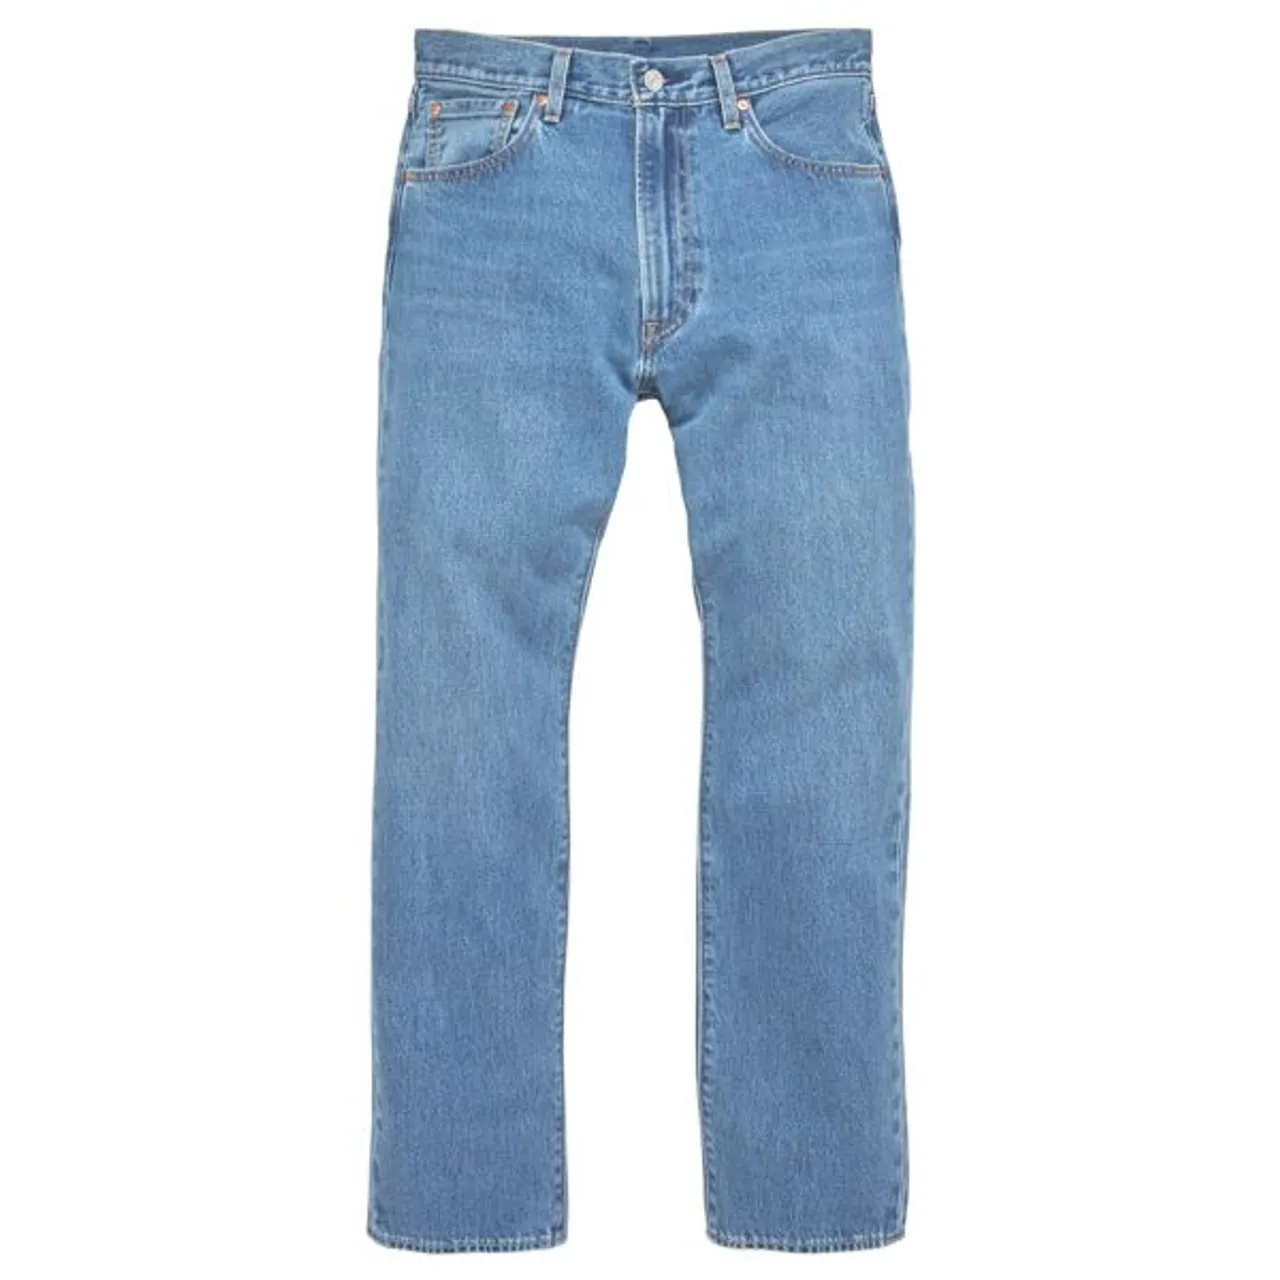 Straight-Jeans LEVI'S "551Z AUTHENTIC" Gr. 30, Länge 30, blau (z0873 medium i) Herren Jeans Loose Fit mit Lederbadge